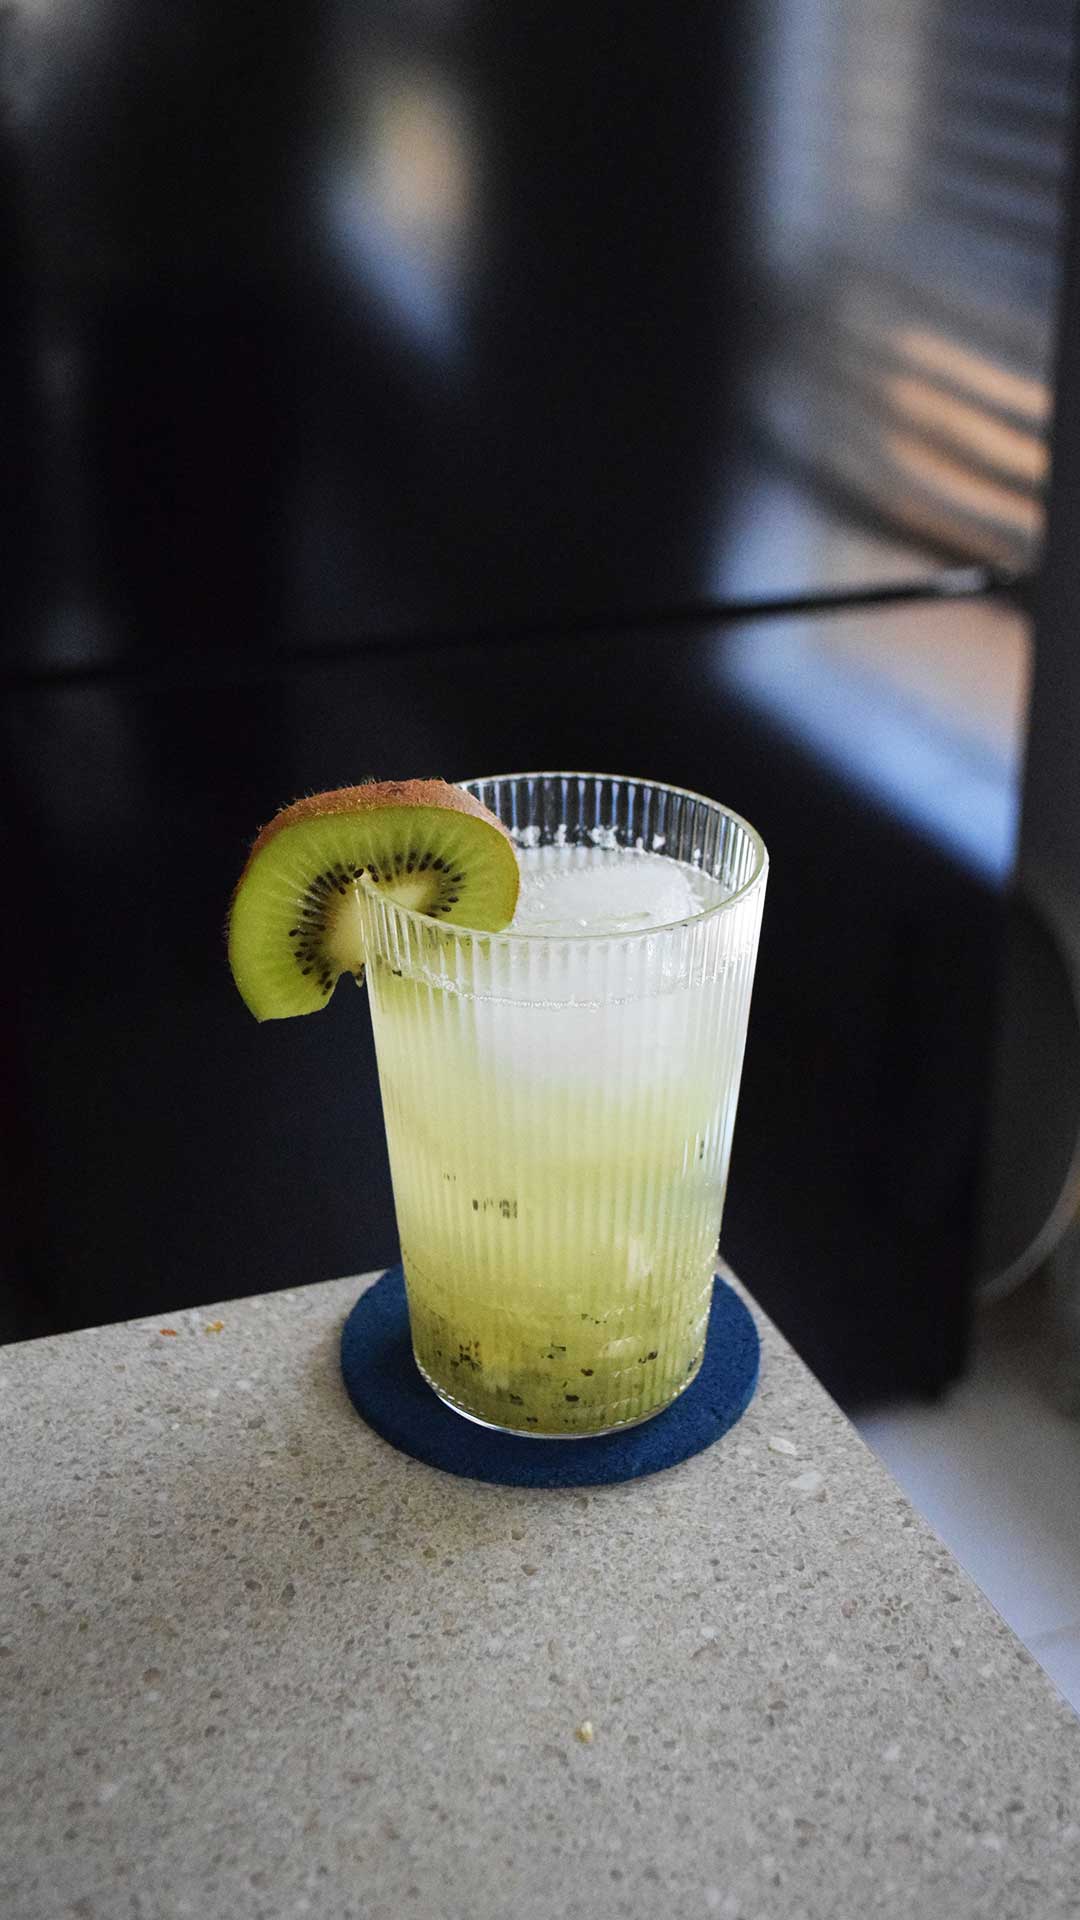 Kiwi Tom Collins Gin cocktail